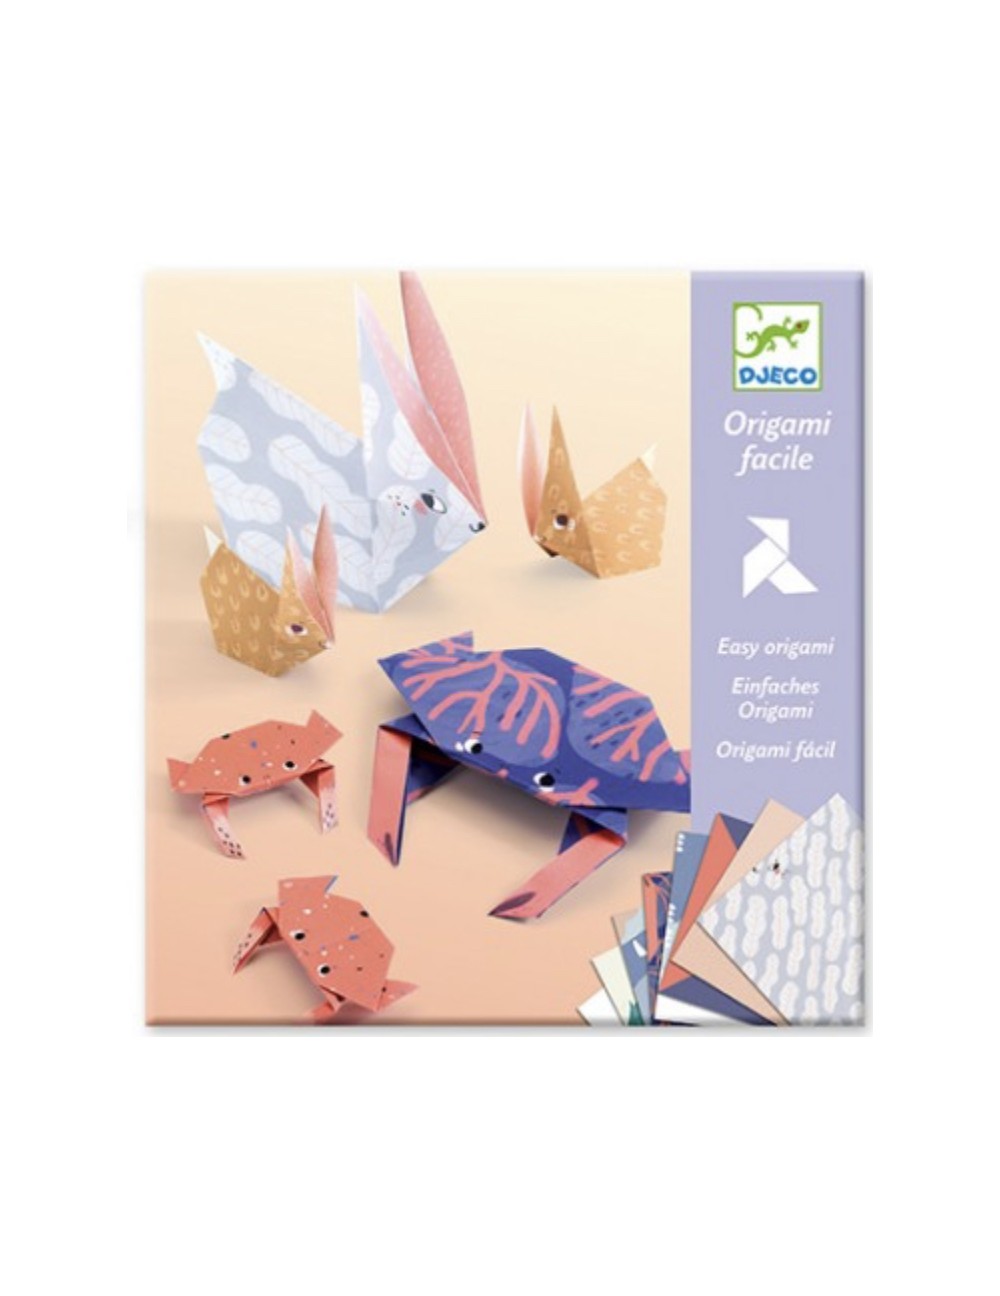 Origami facile family - Djeco